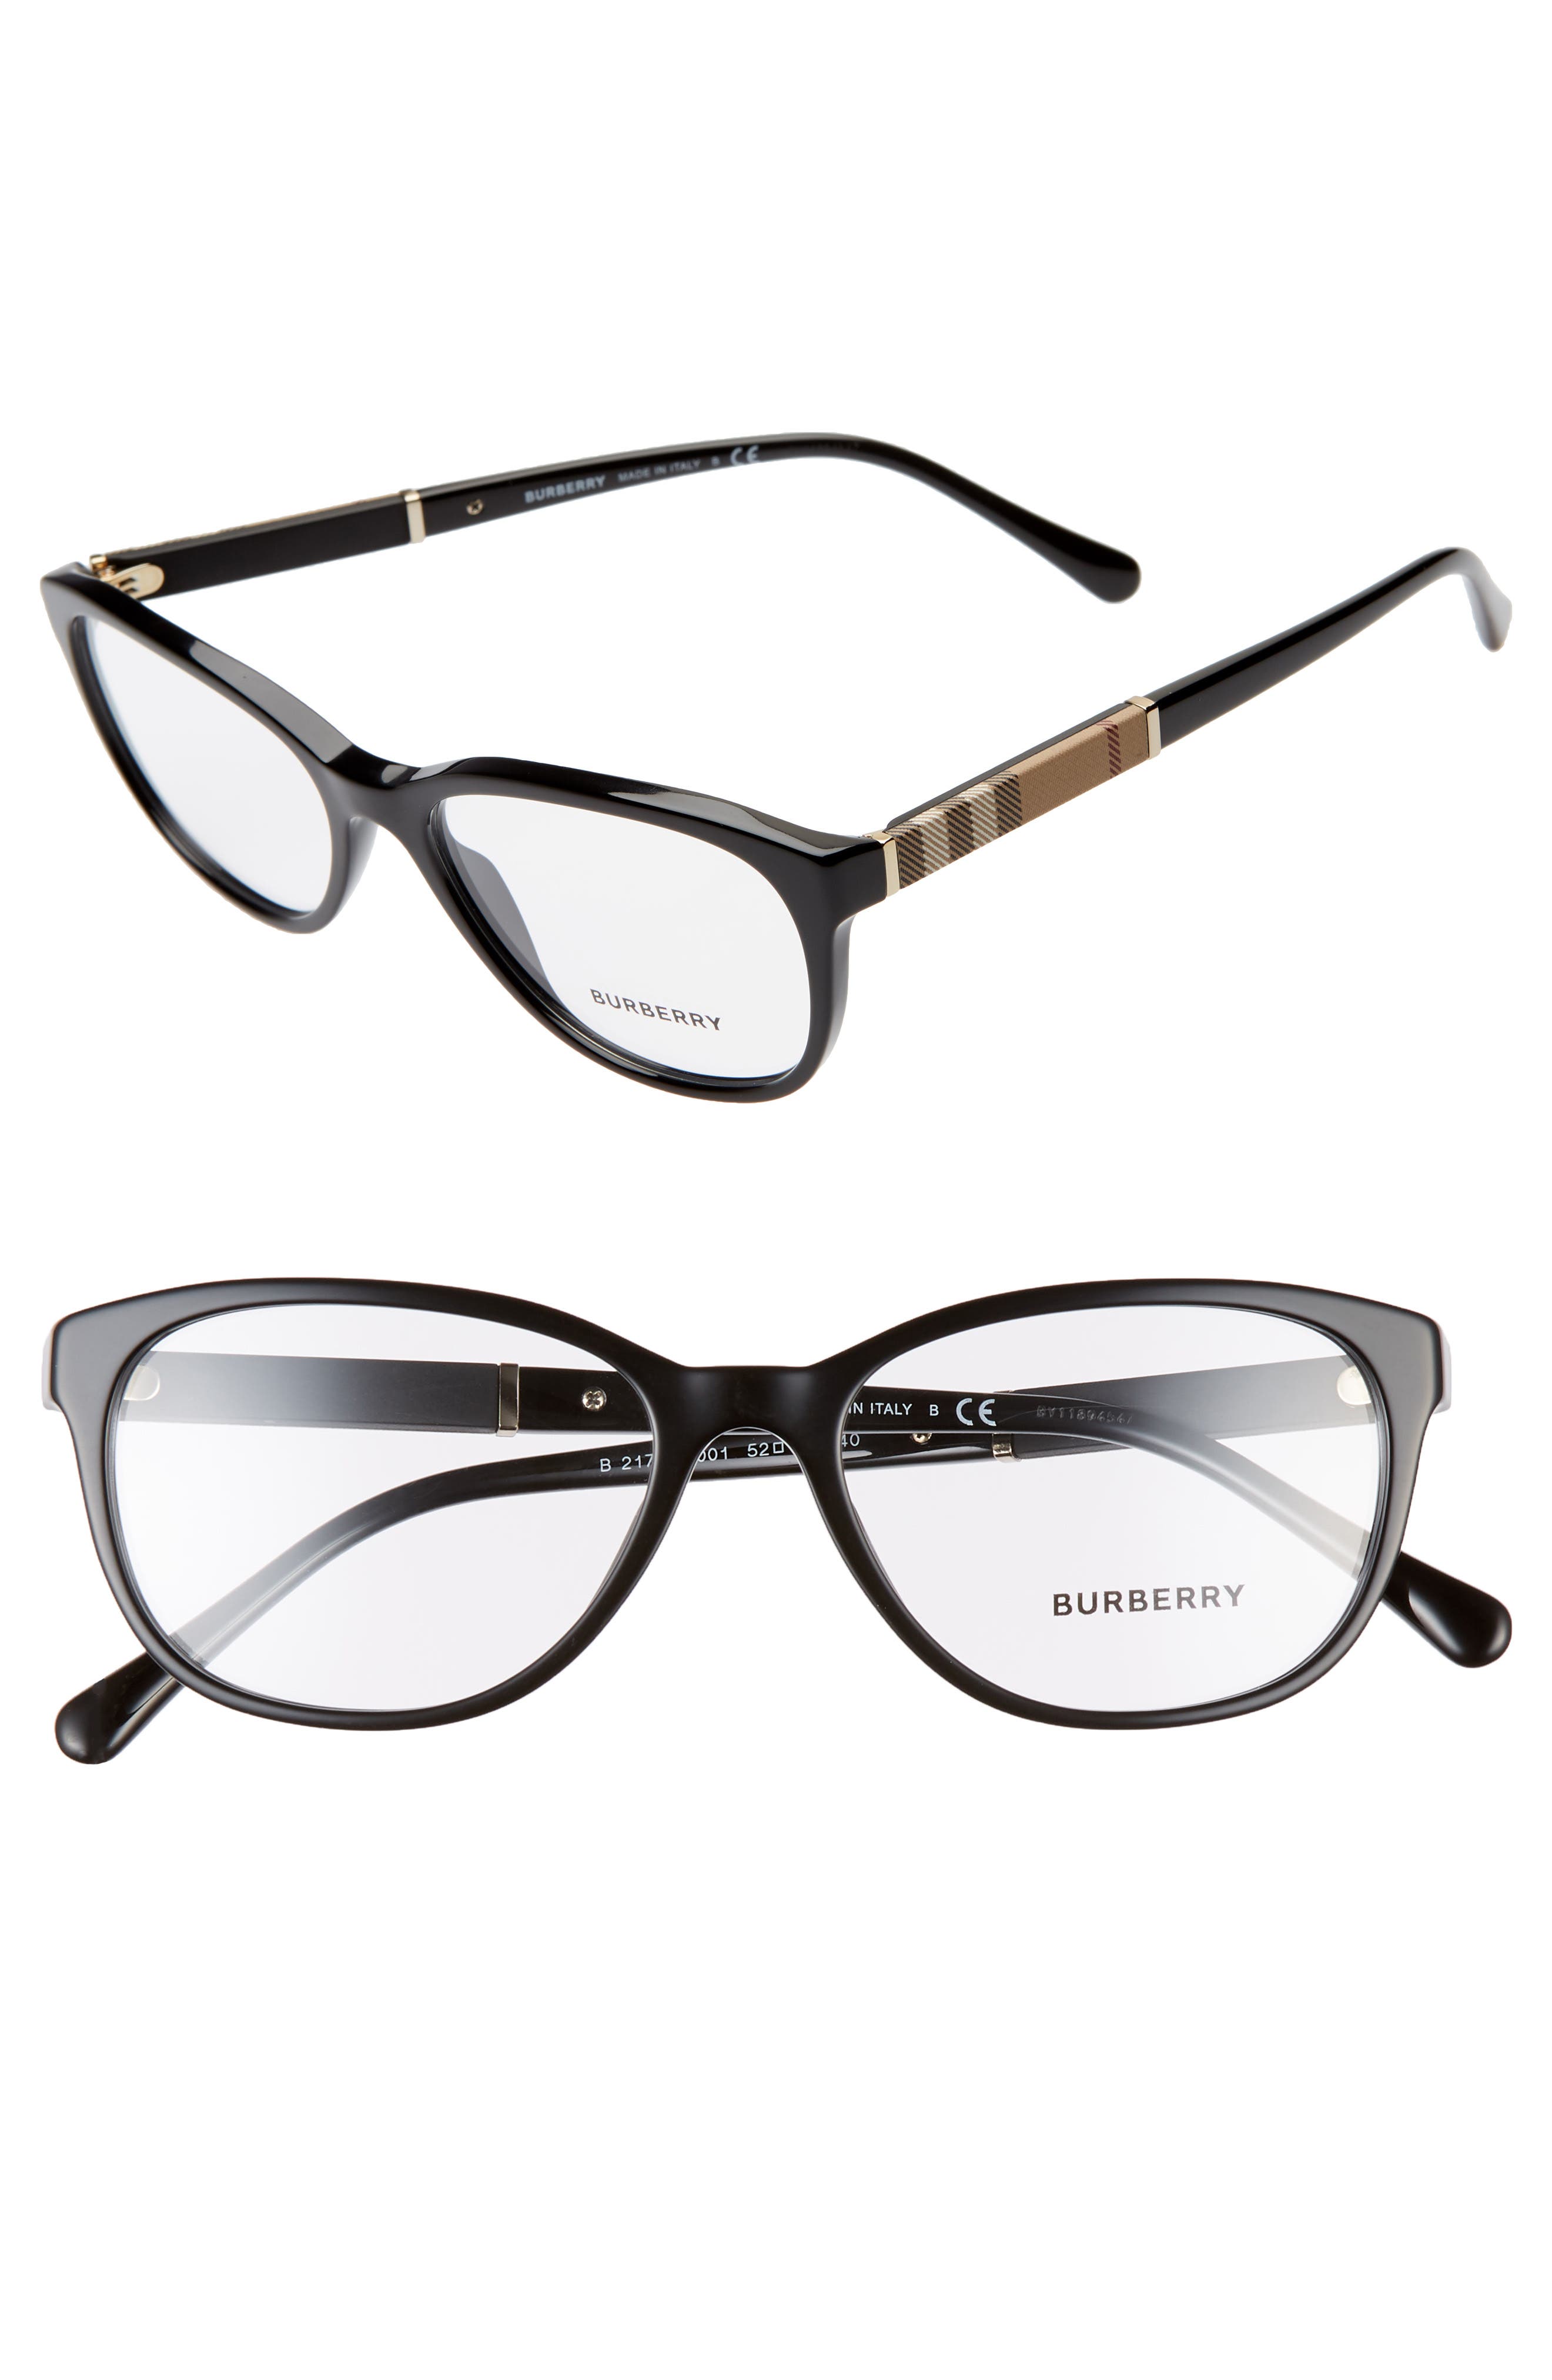 burberry glasses womens sale